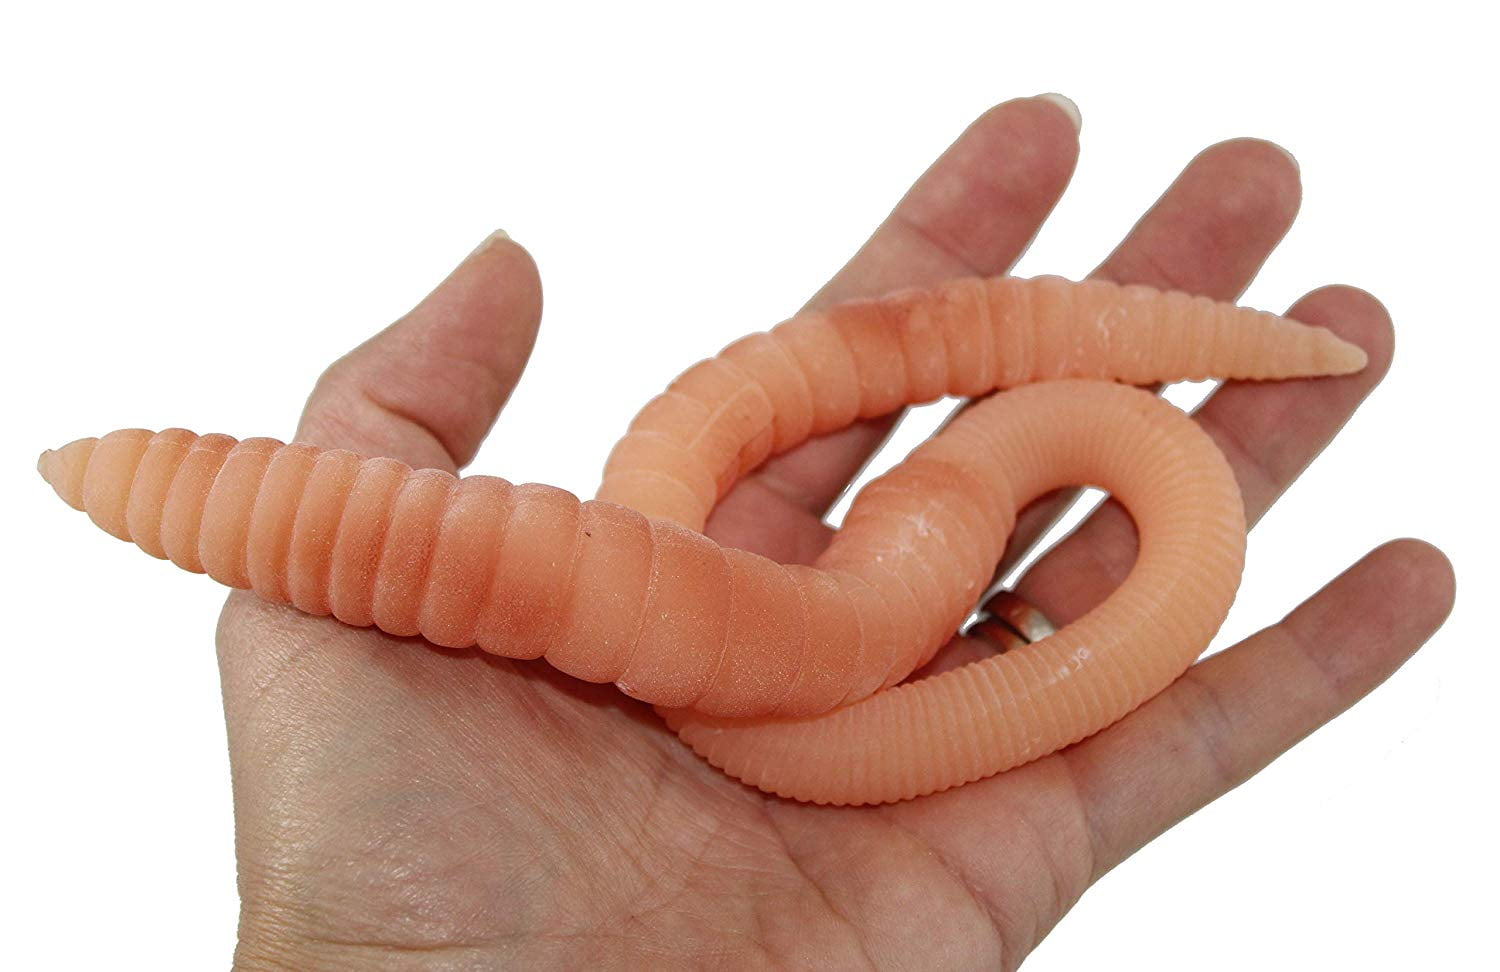 Stretchy Worm - Squishy Sensory Fidget Toy - Stress Relief - Builds  Resistance - Kids Adults